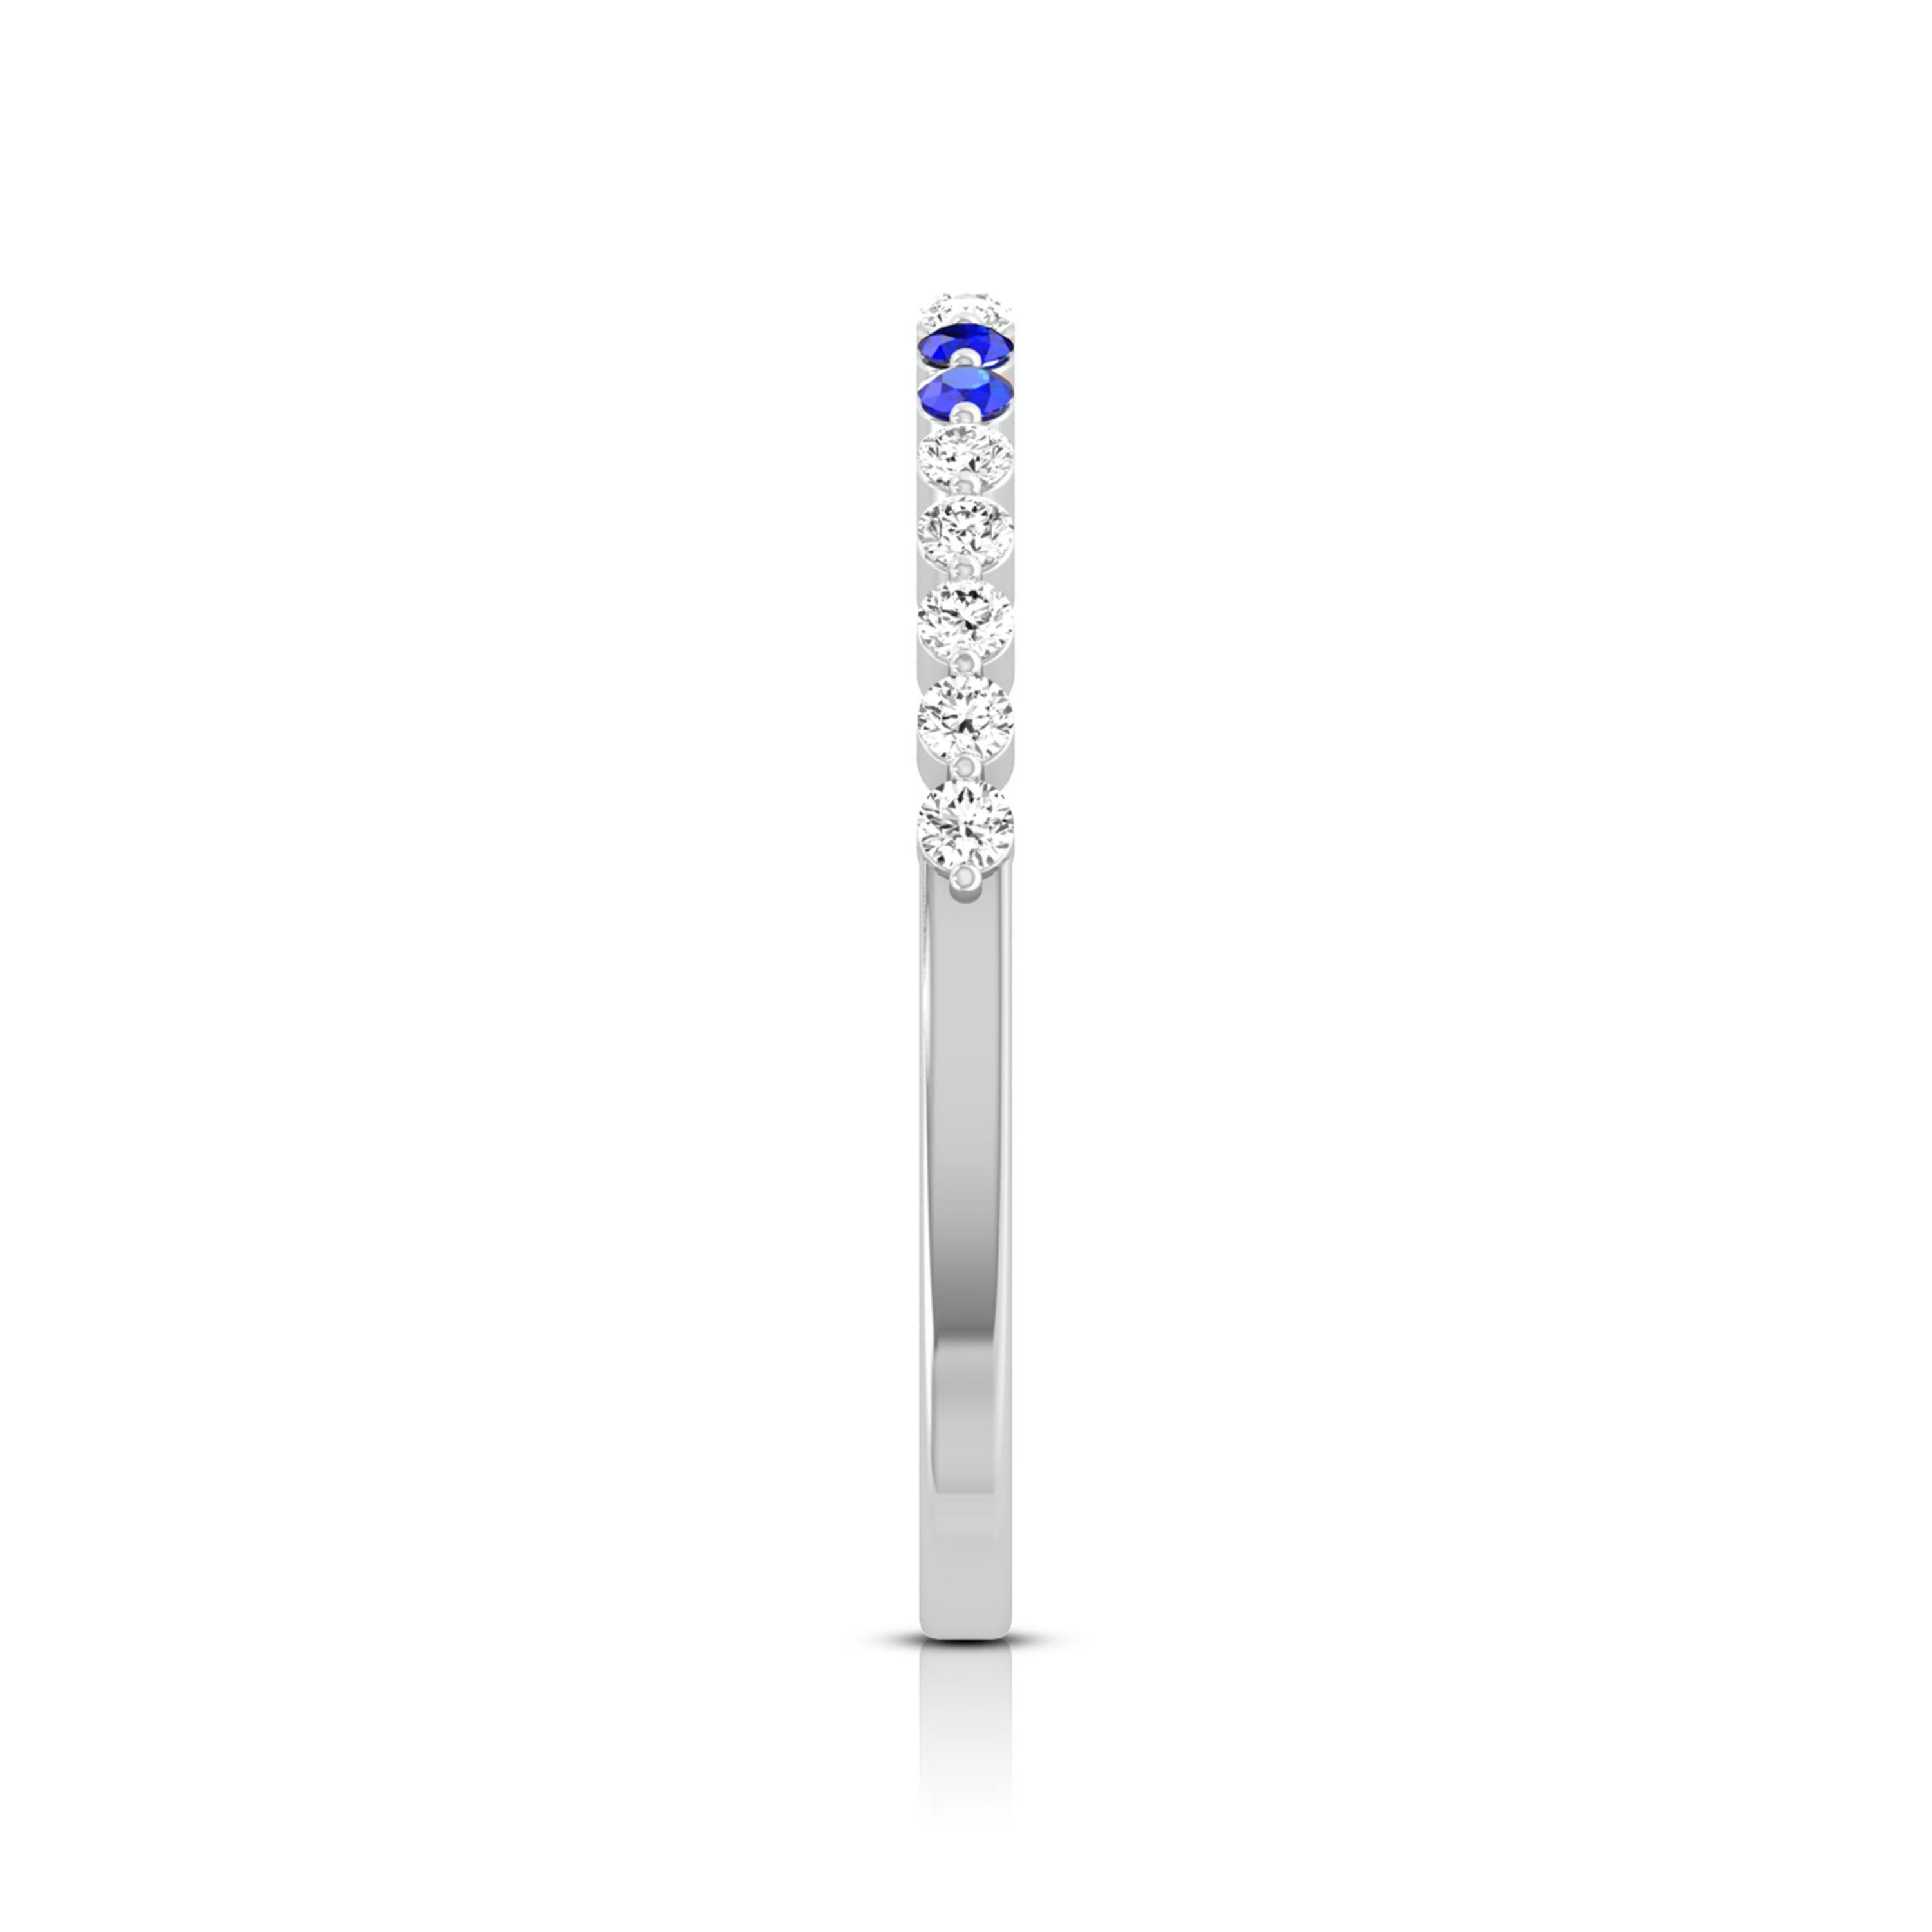 Blue Sapphire Platinum Diamond Engagement Ring JL PT LR 7010   Jewelove